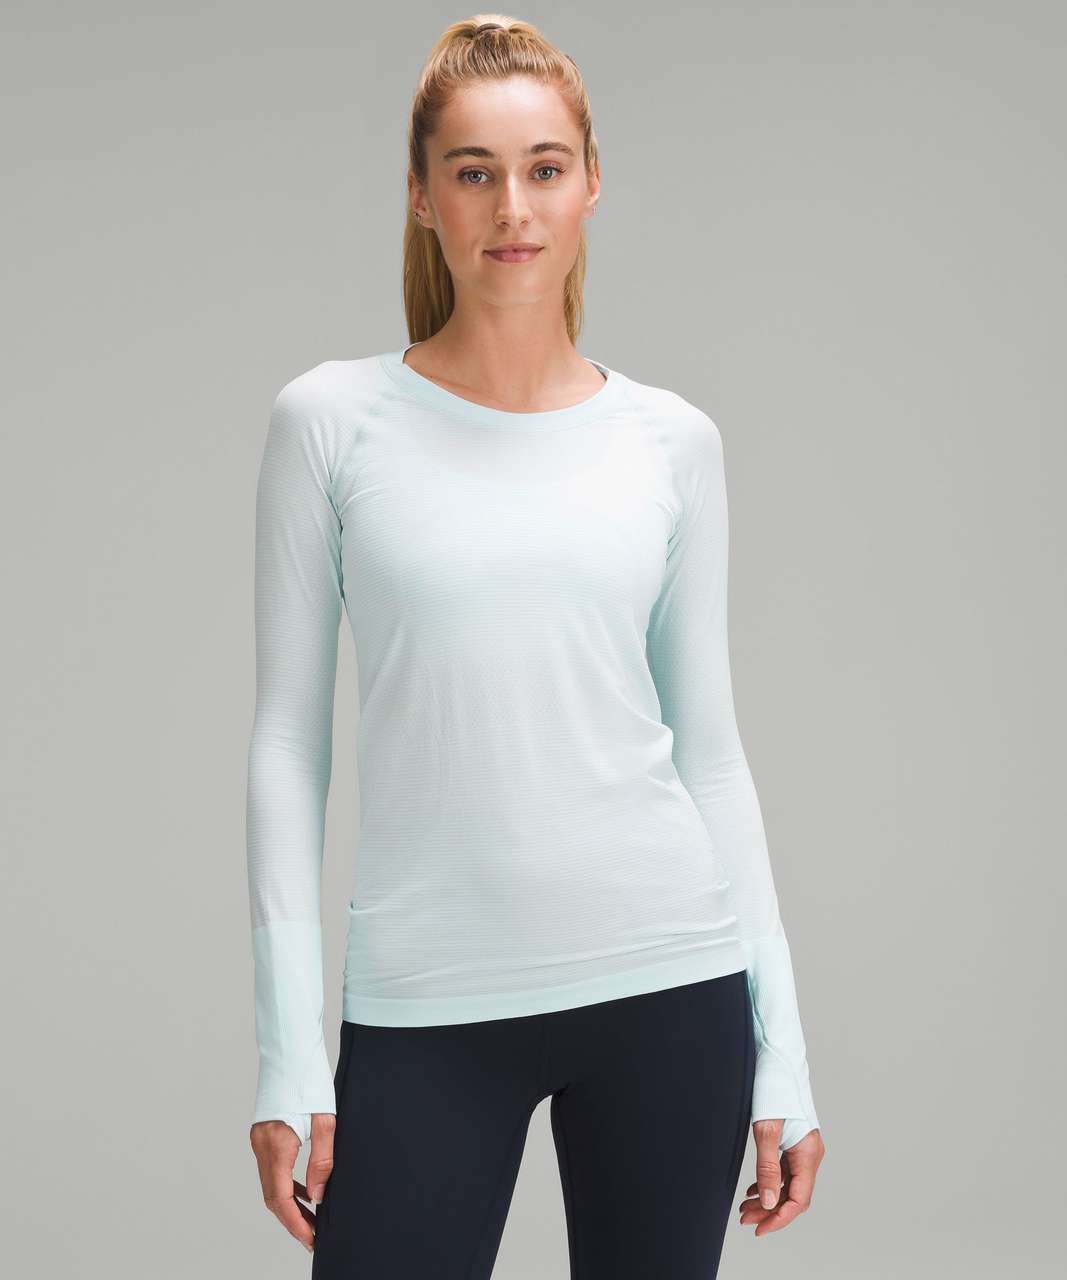 Lululemon Swiftly Tech Long-Sleeve Shirt 2.0 - Sheer Blue / Sheer Blue